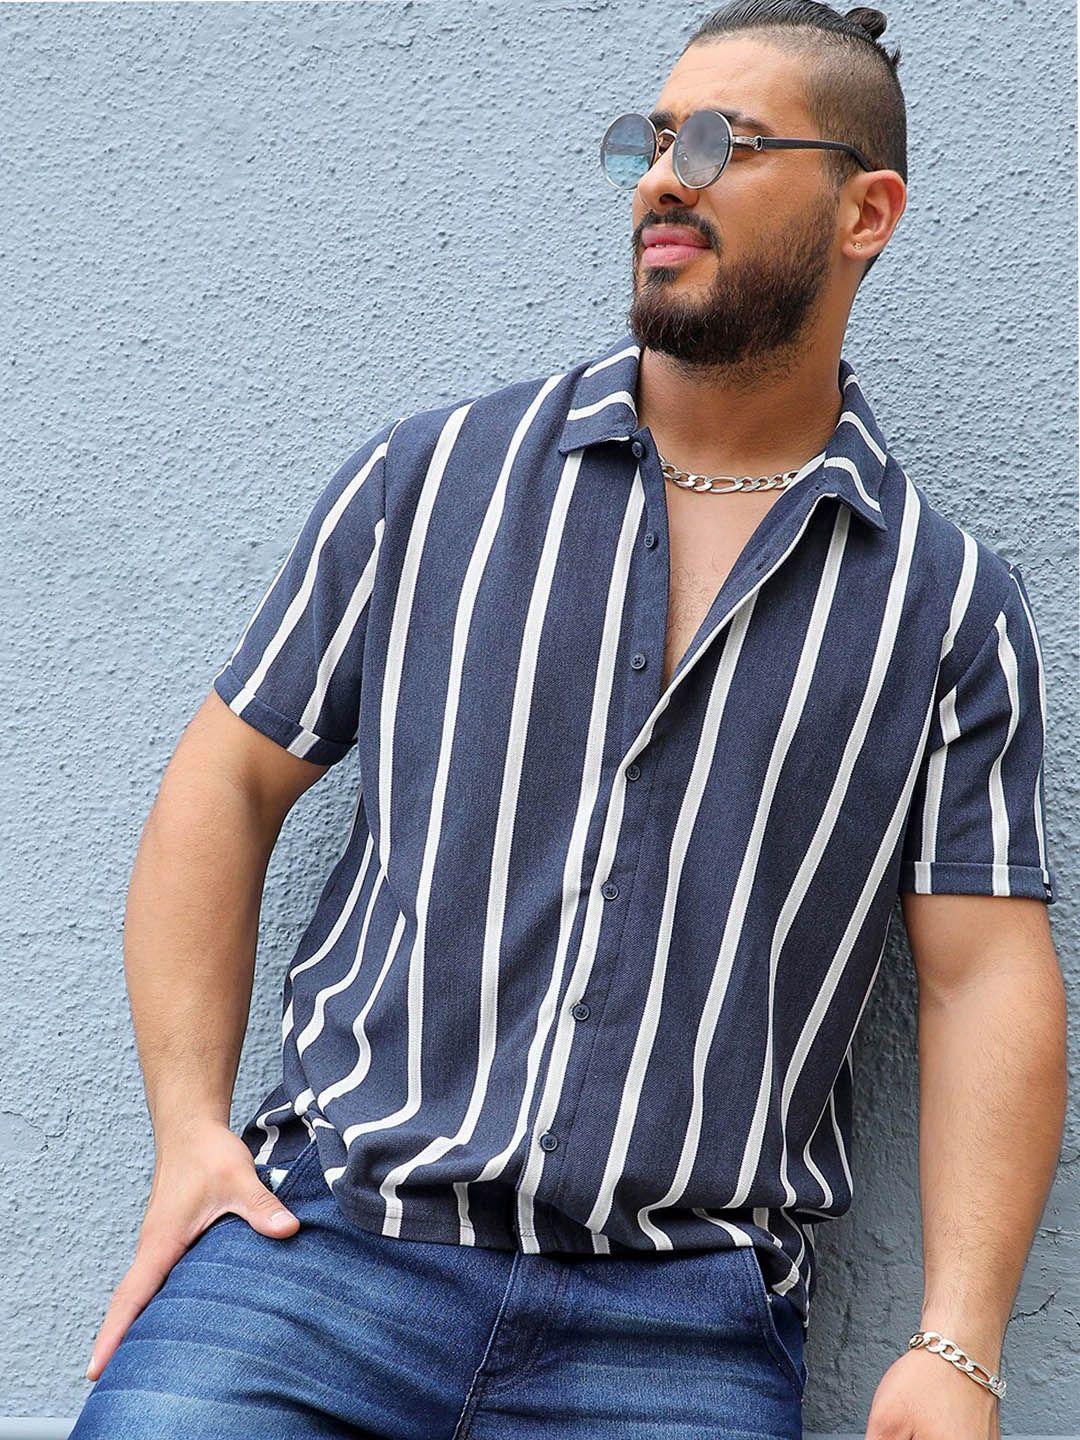 instafab plus classic vertical striped cotton casual shirt